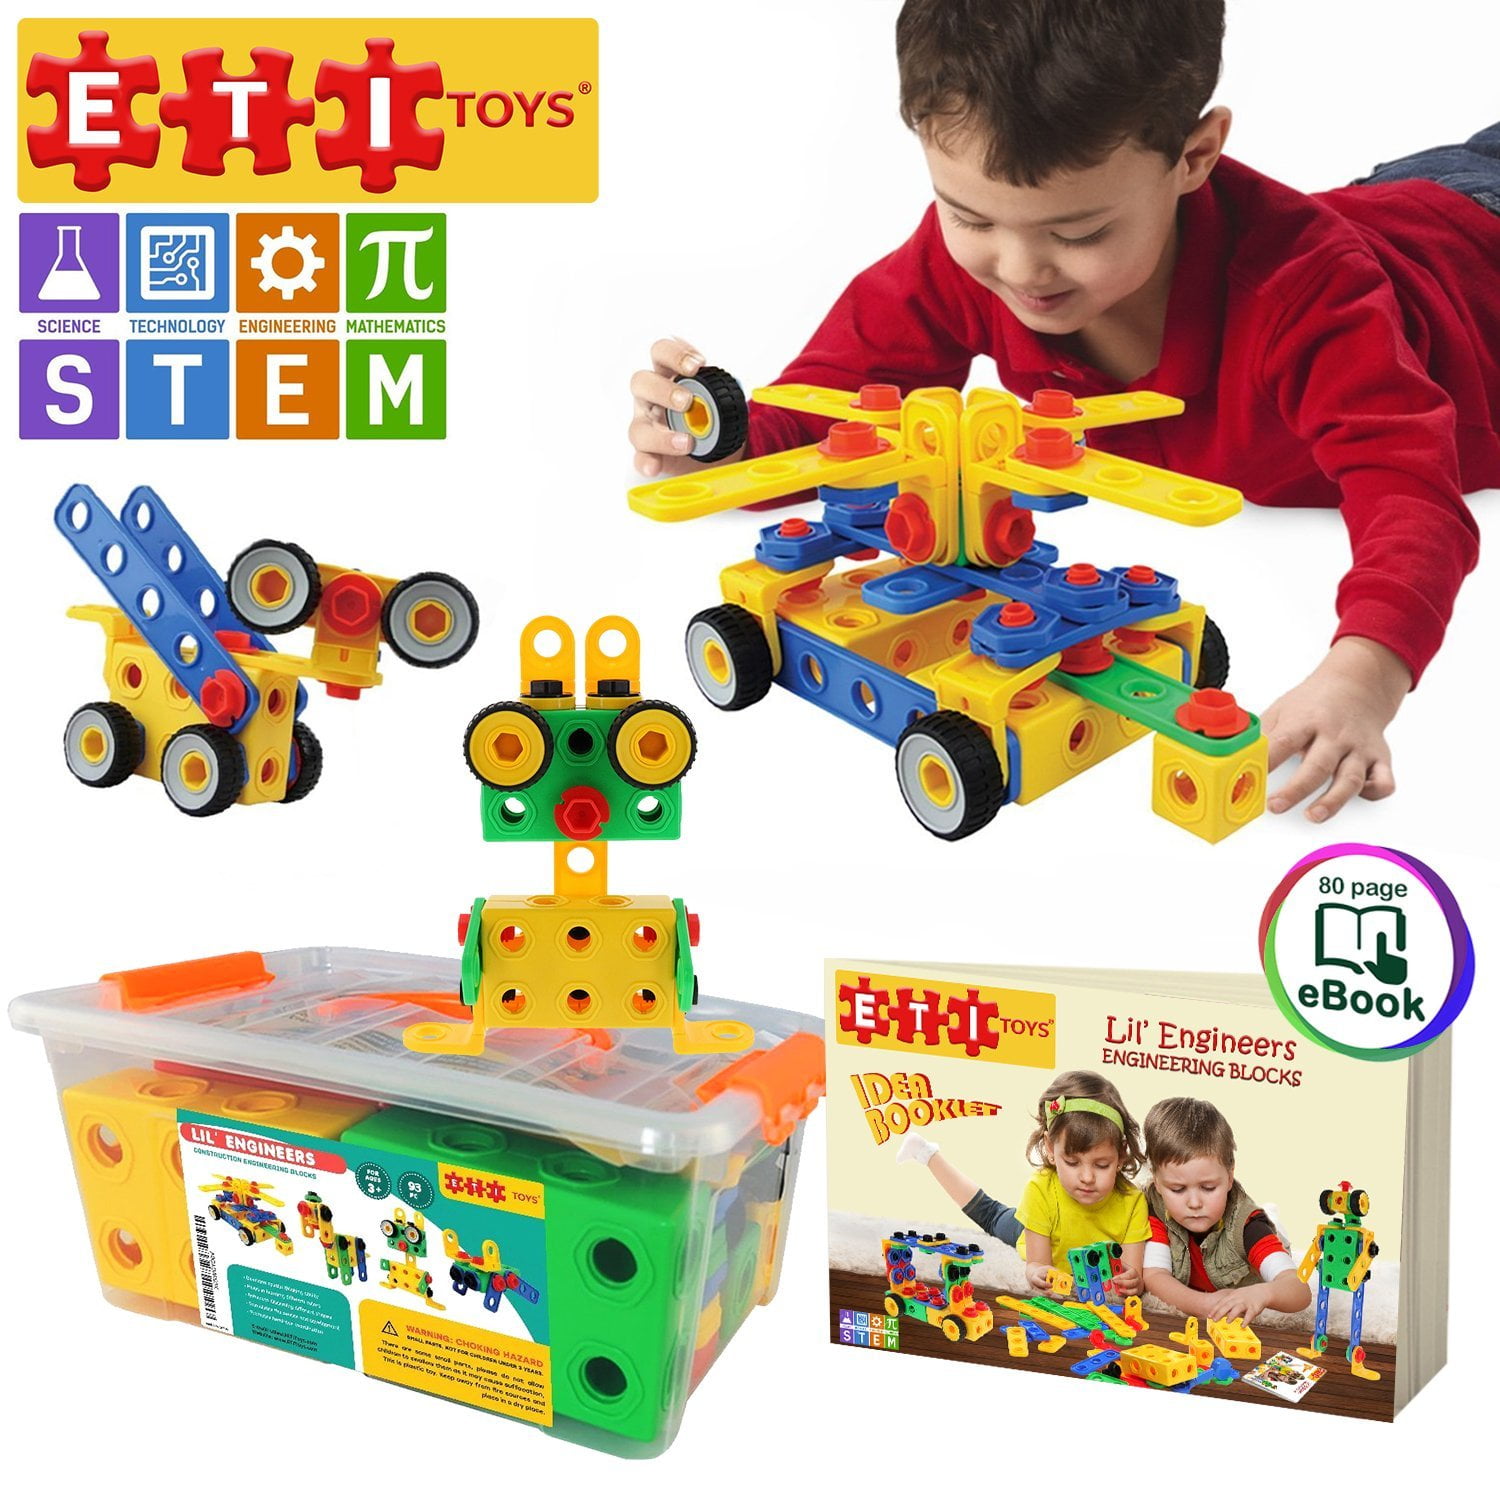 ETI Toys Stem Learning Kit Educational Construction Building Set 101 Piece 3 for sale online 